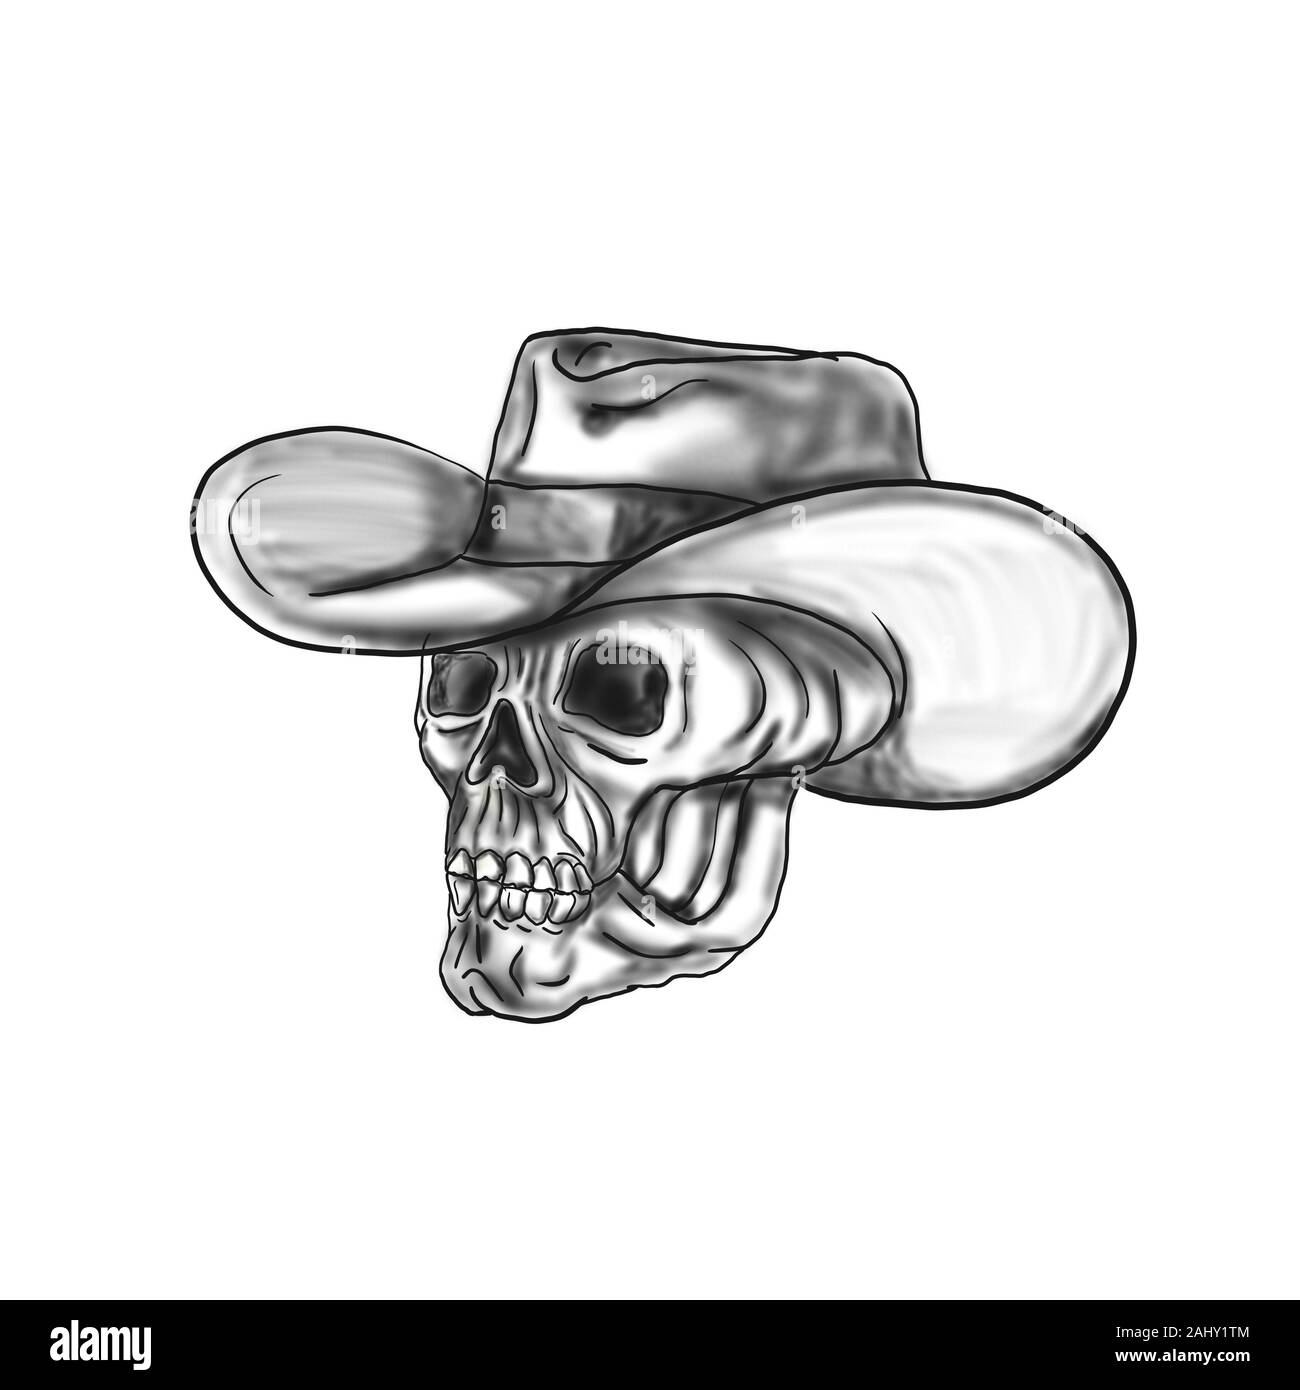 Dallas Cowboys Helmet Tattoo On Hand